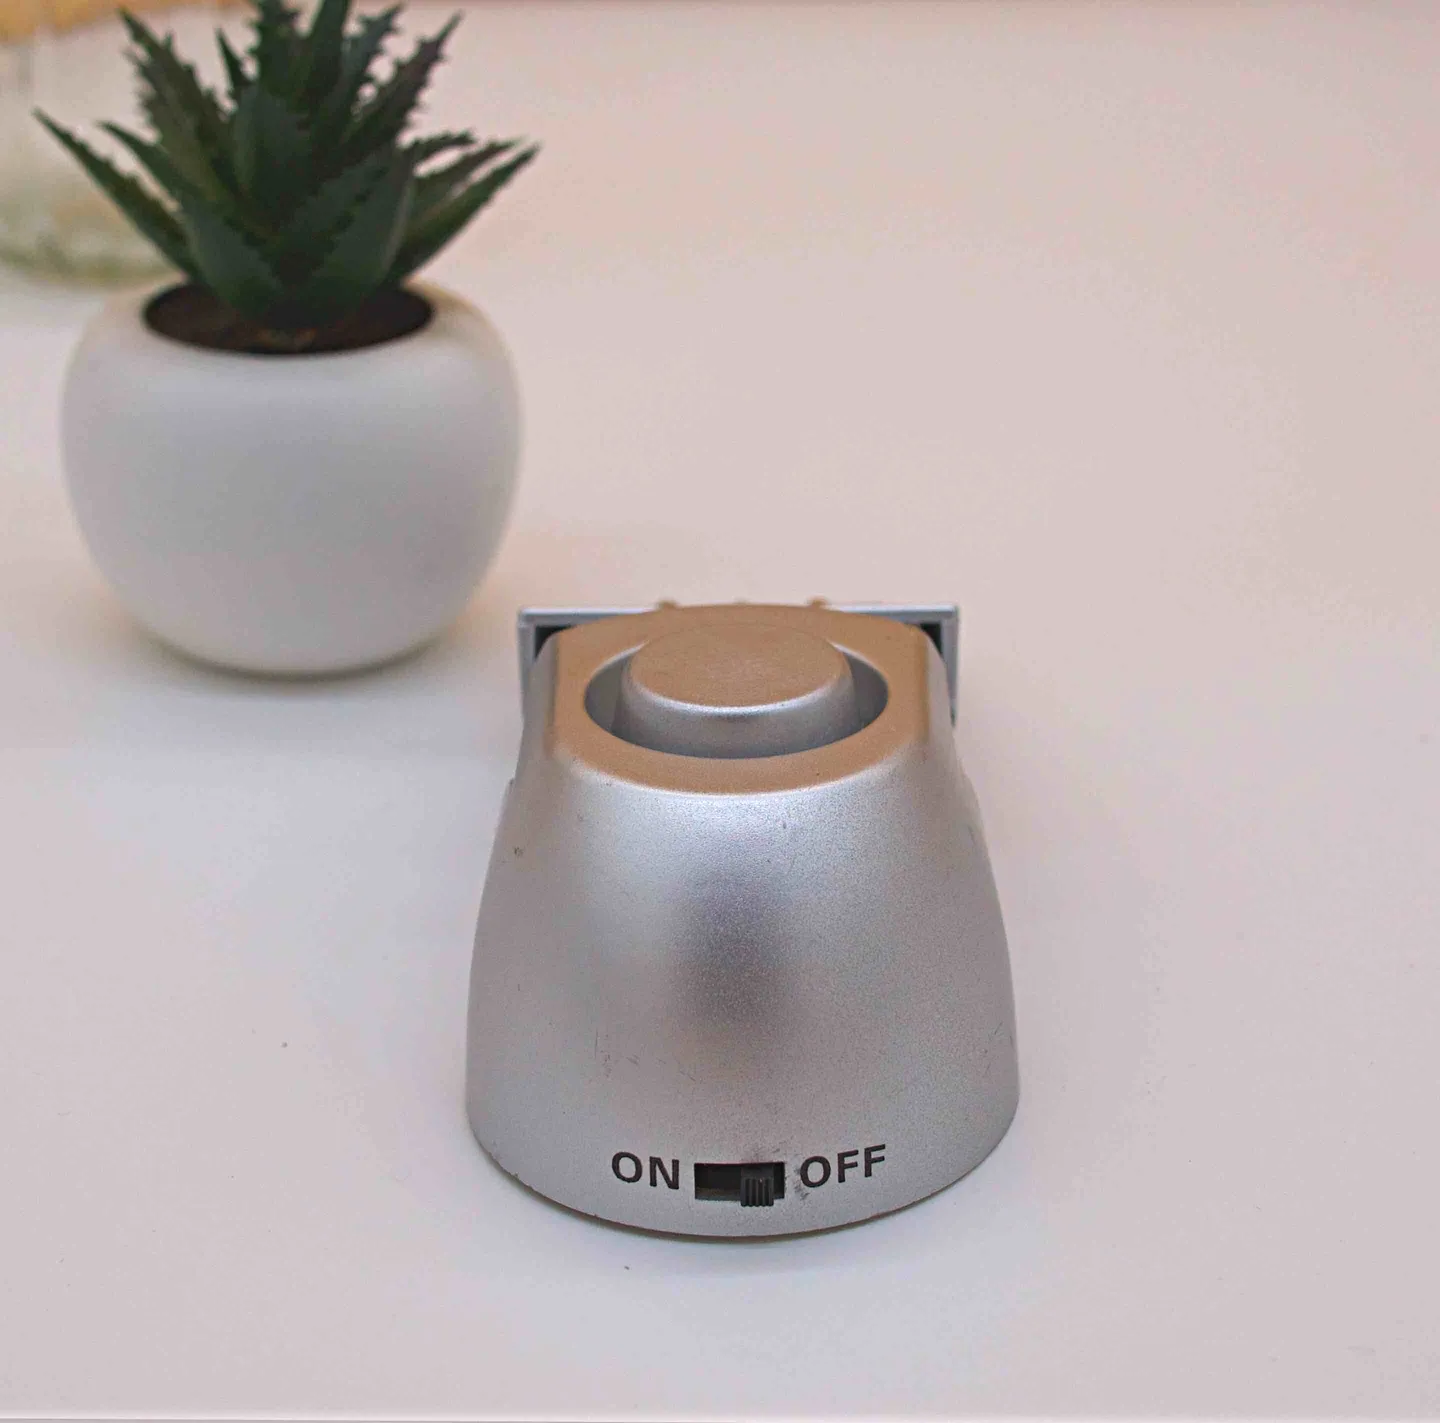 Alarme et Lampe Torche - Bloque porte alarme 120dB…L'alarme anti-intrusion simple et efficace !